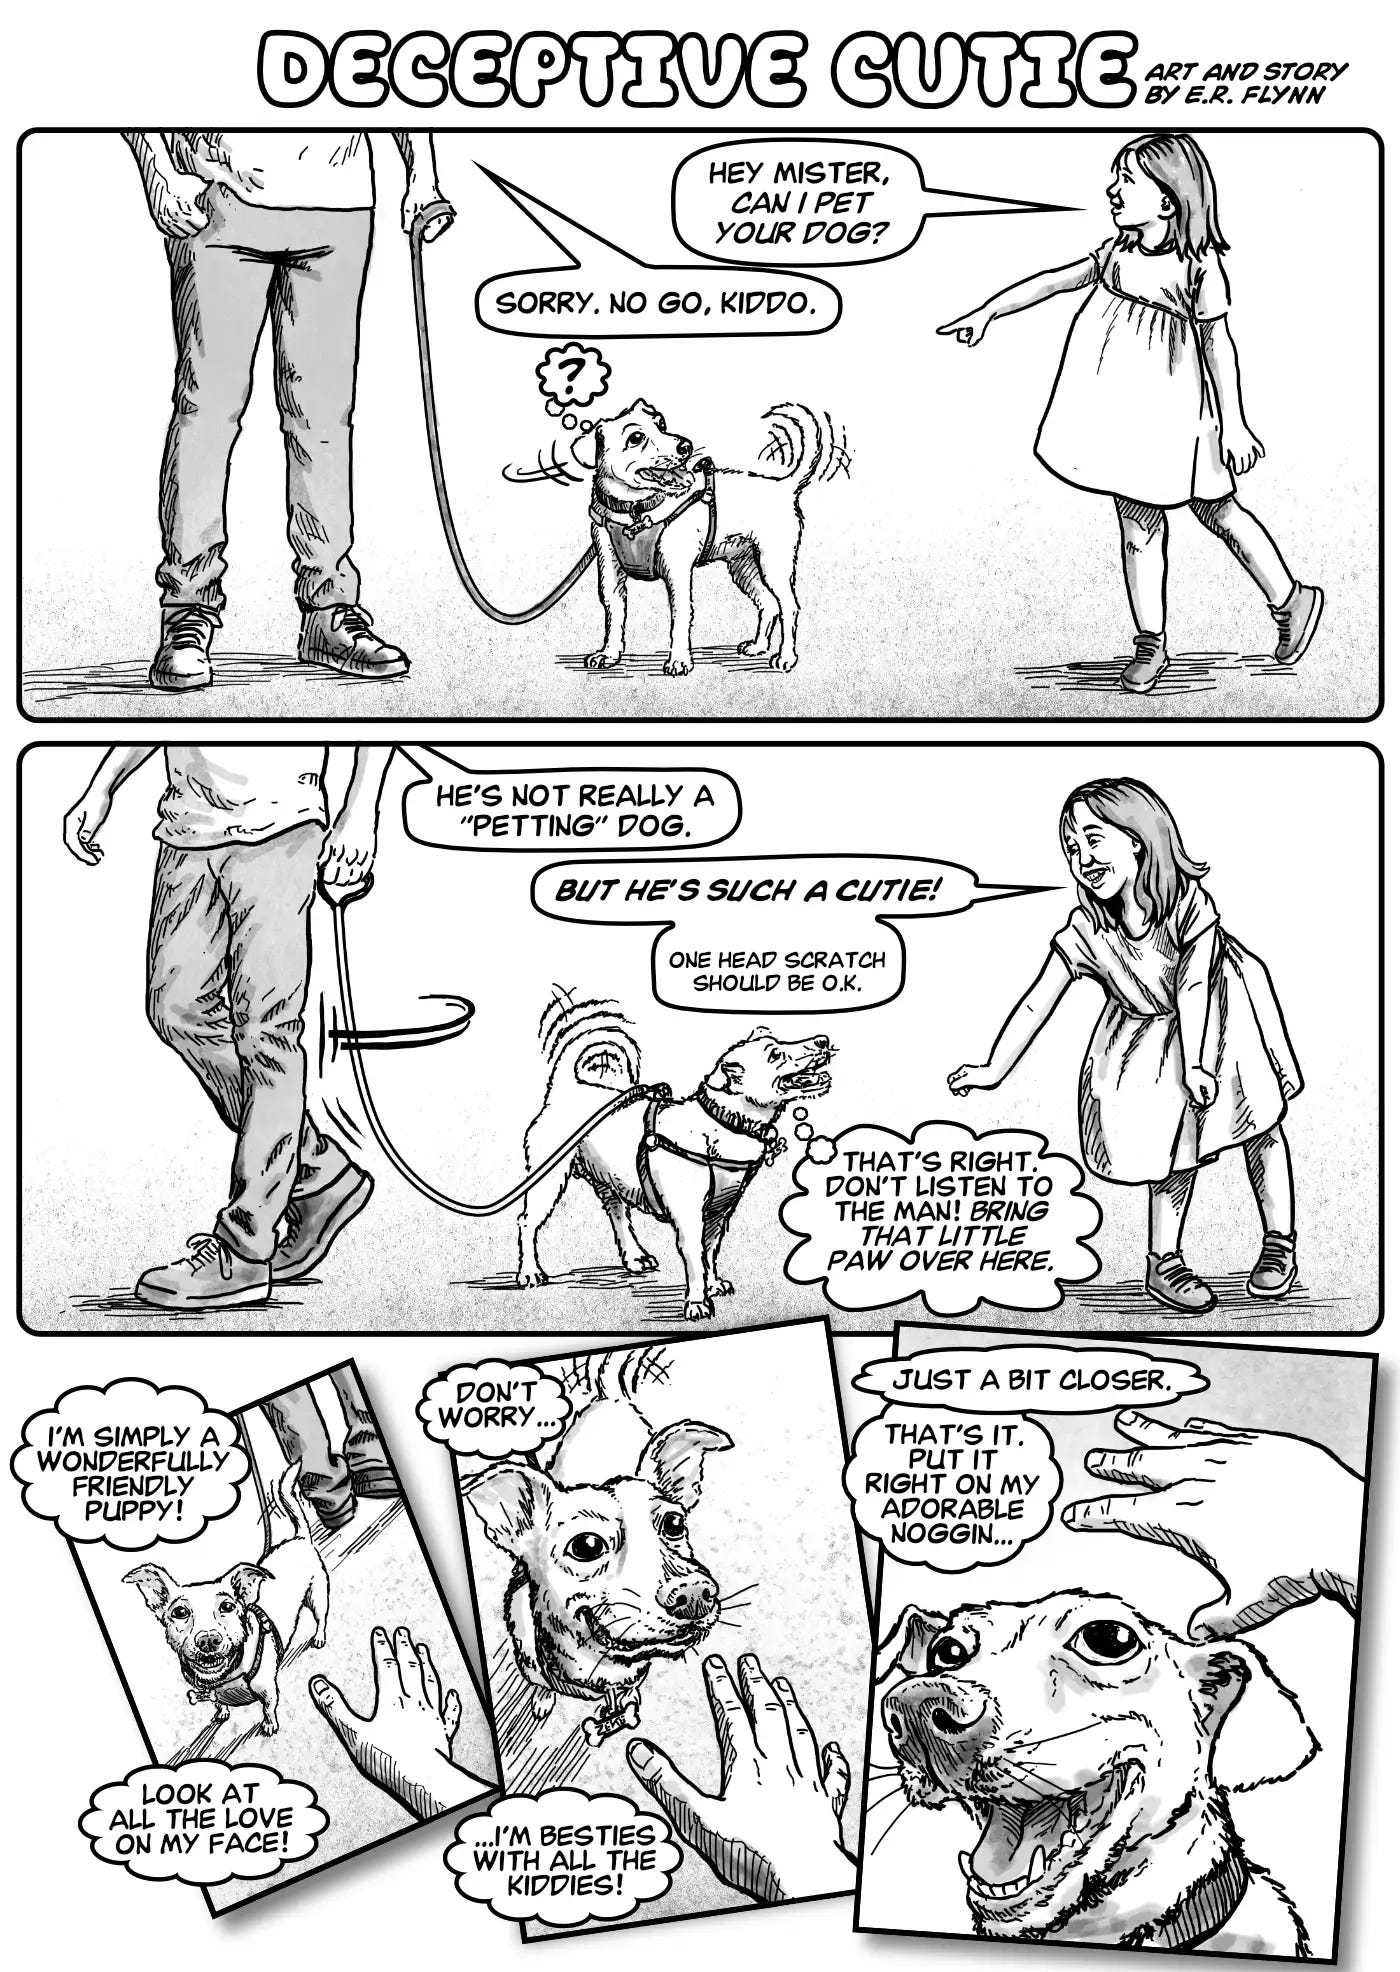 Deceptive Cutie Page 1 Comic by ER Flynn